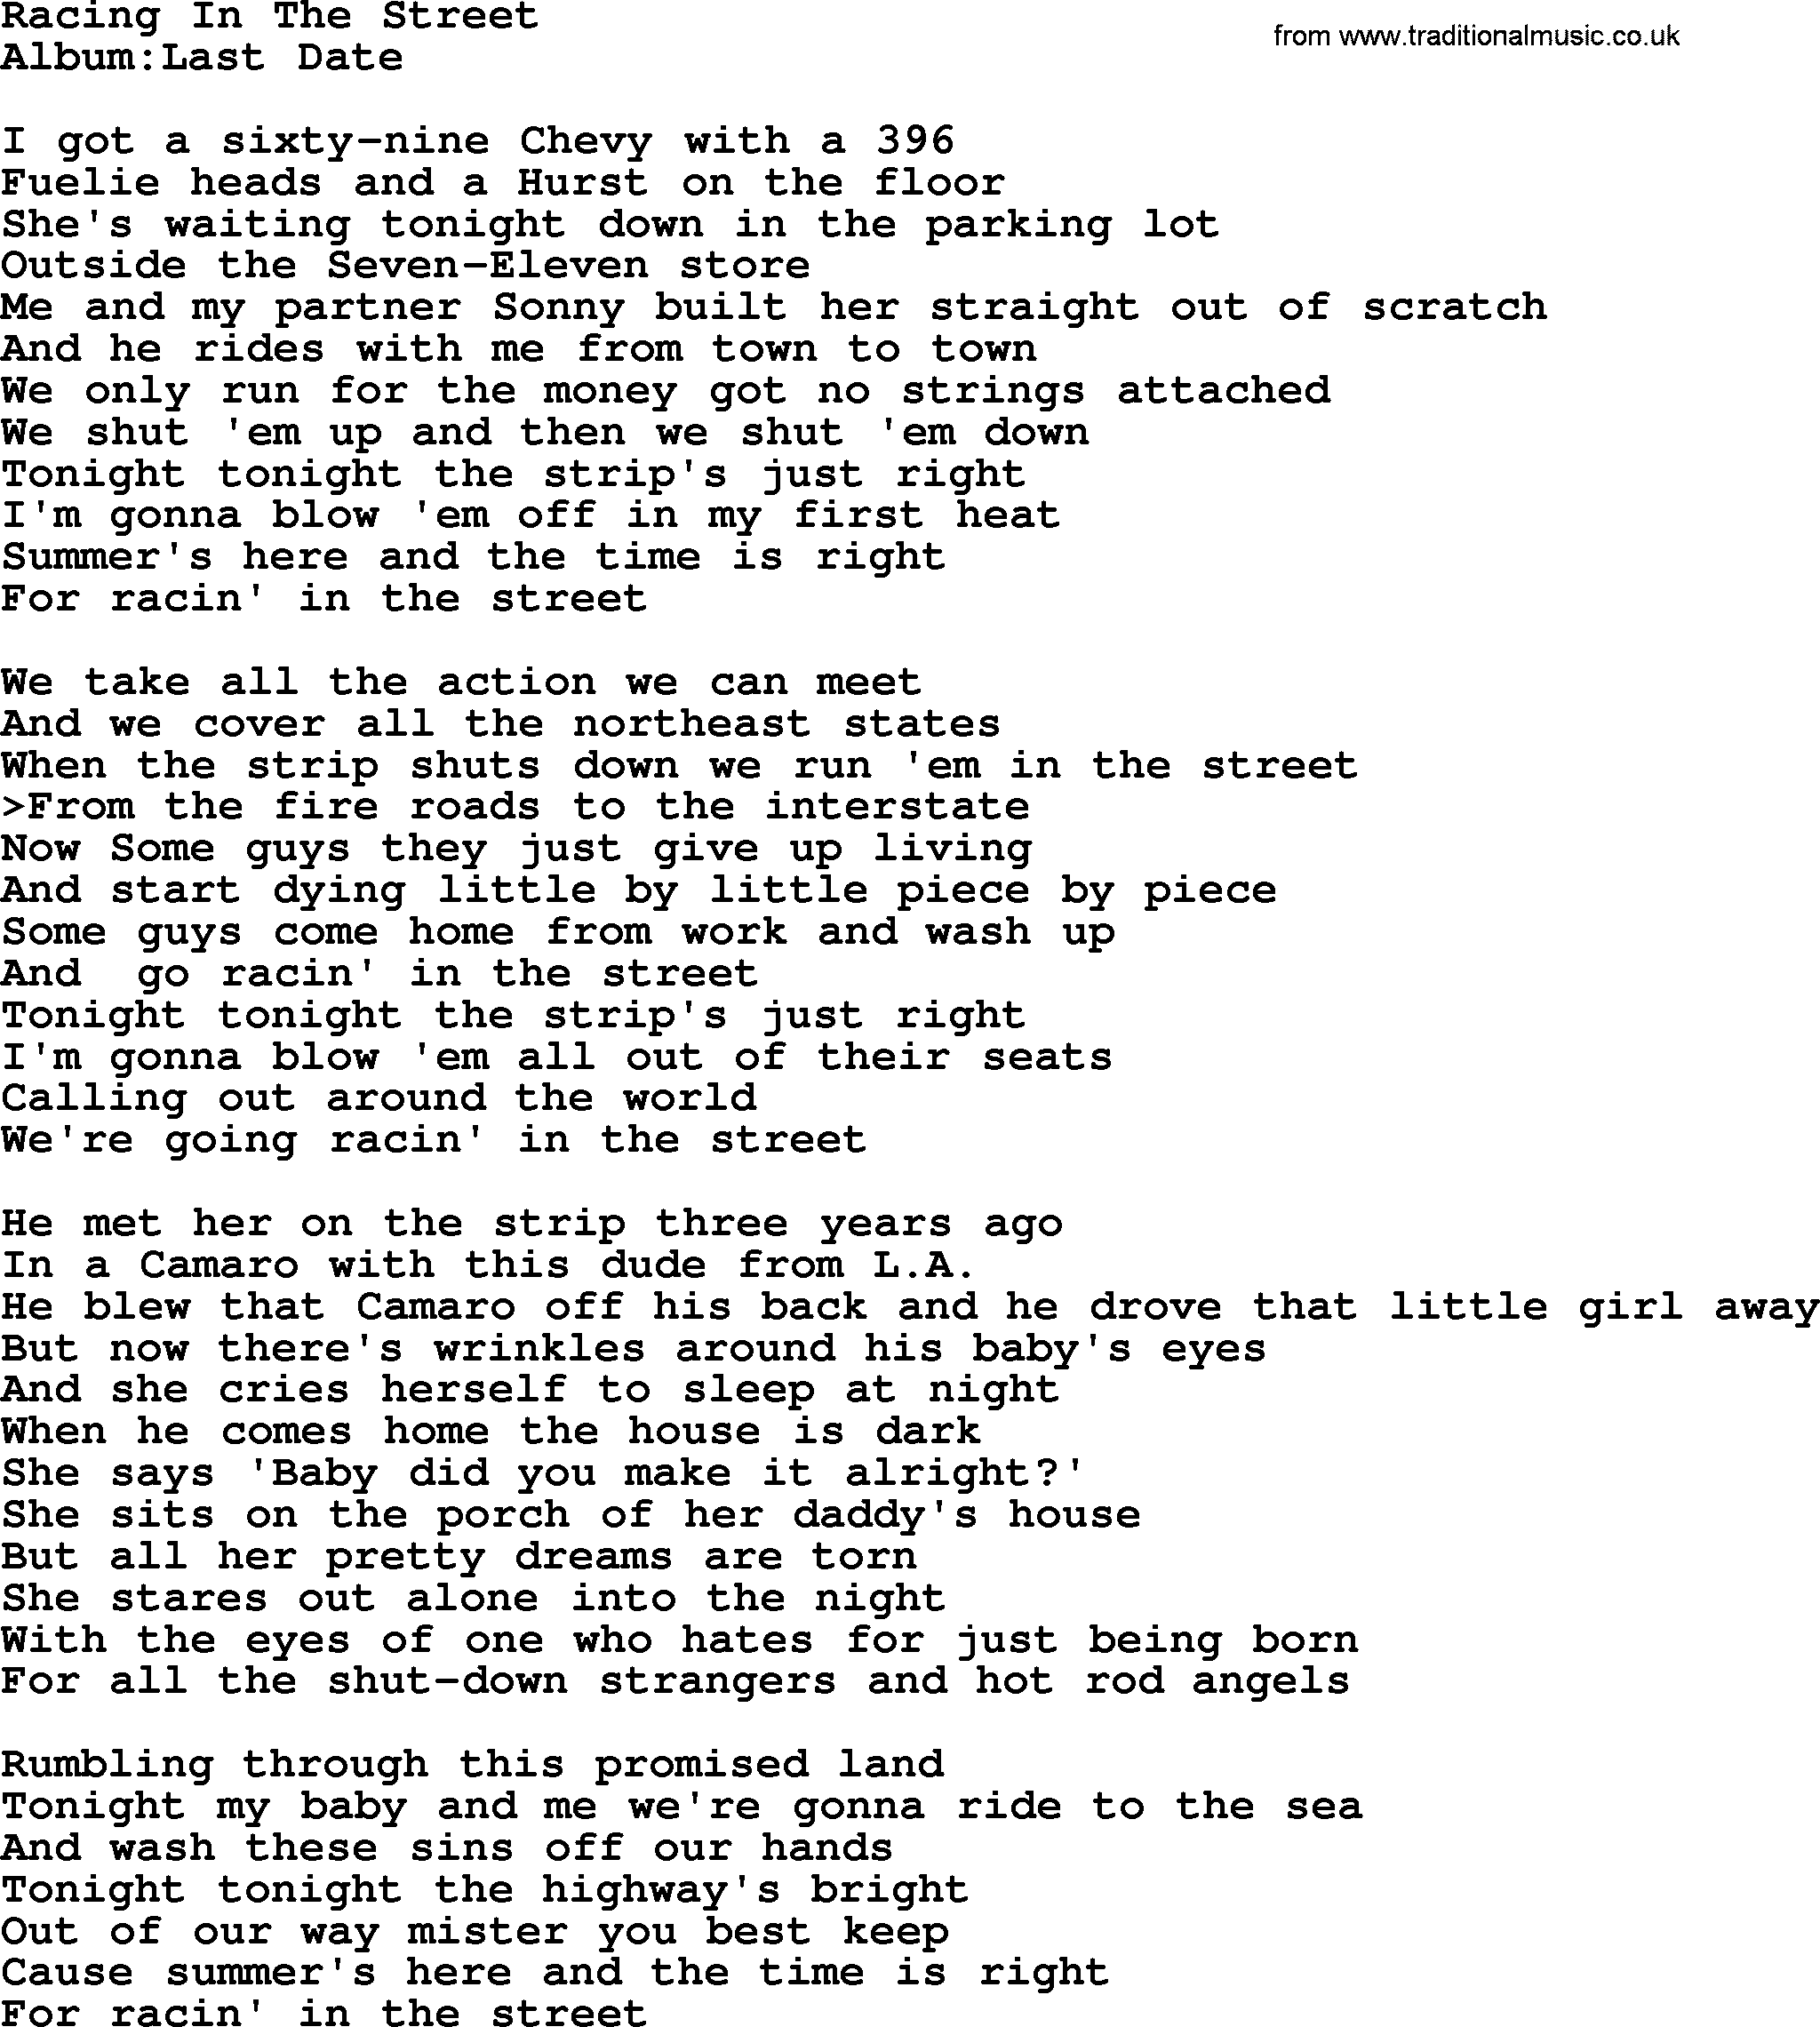 Emmylou Harris song: Racing In The Street lyrics